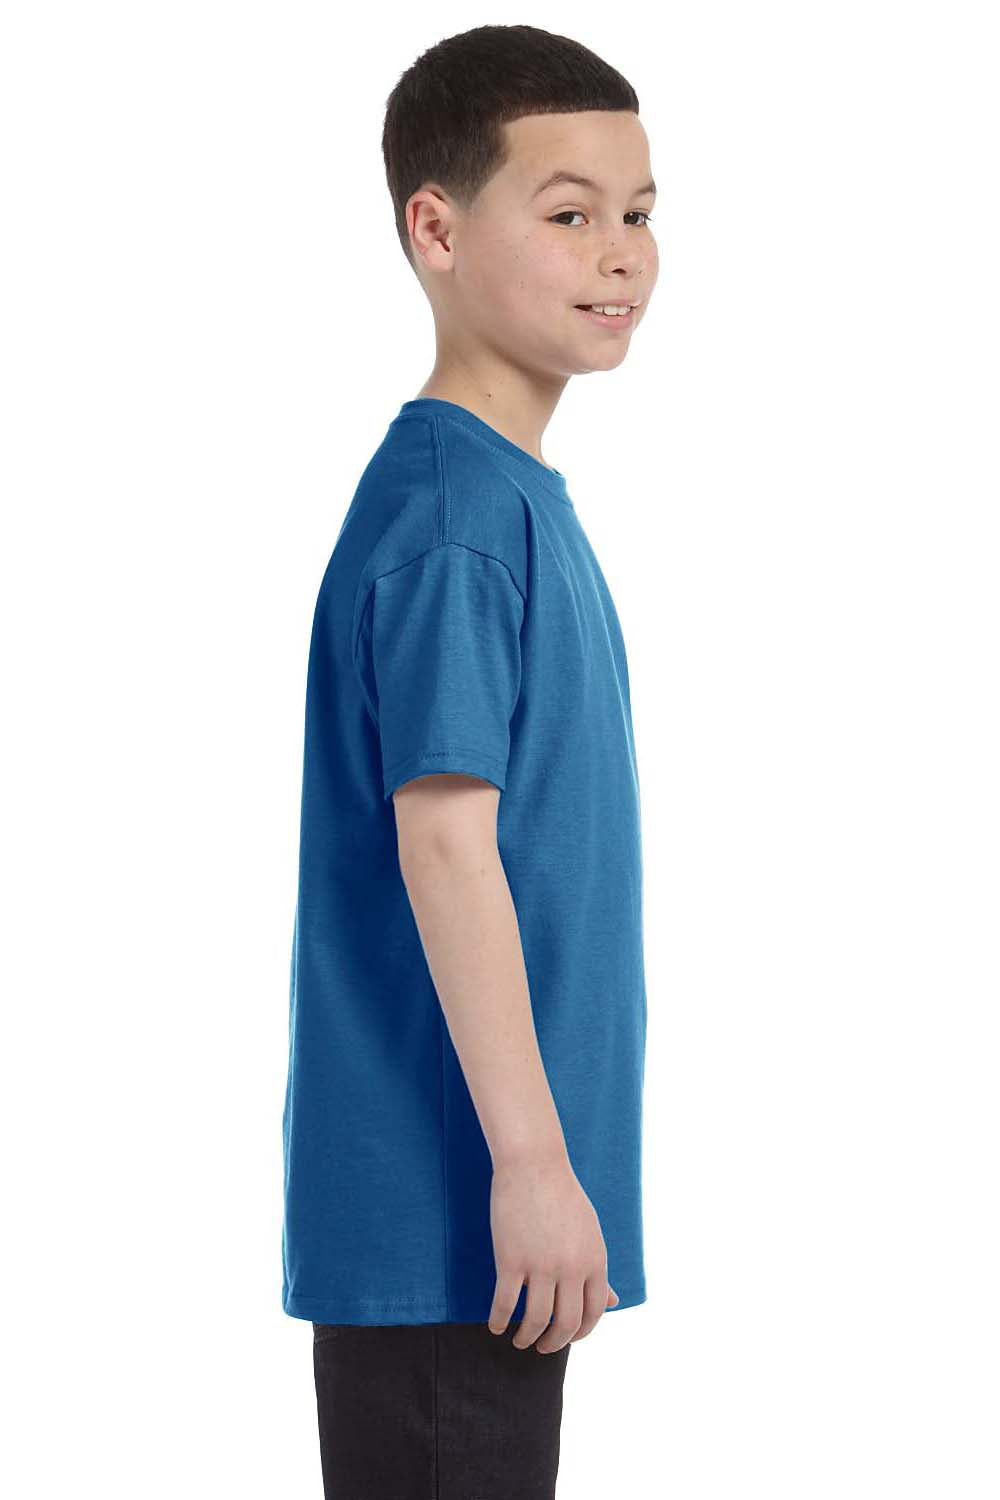 Hanes 54500 Youth ComfortSoft Short Sleeve Crewneck T-Shirt Royal Blue Side